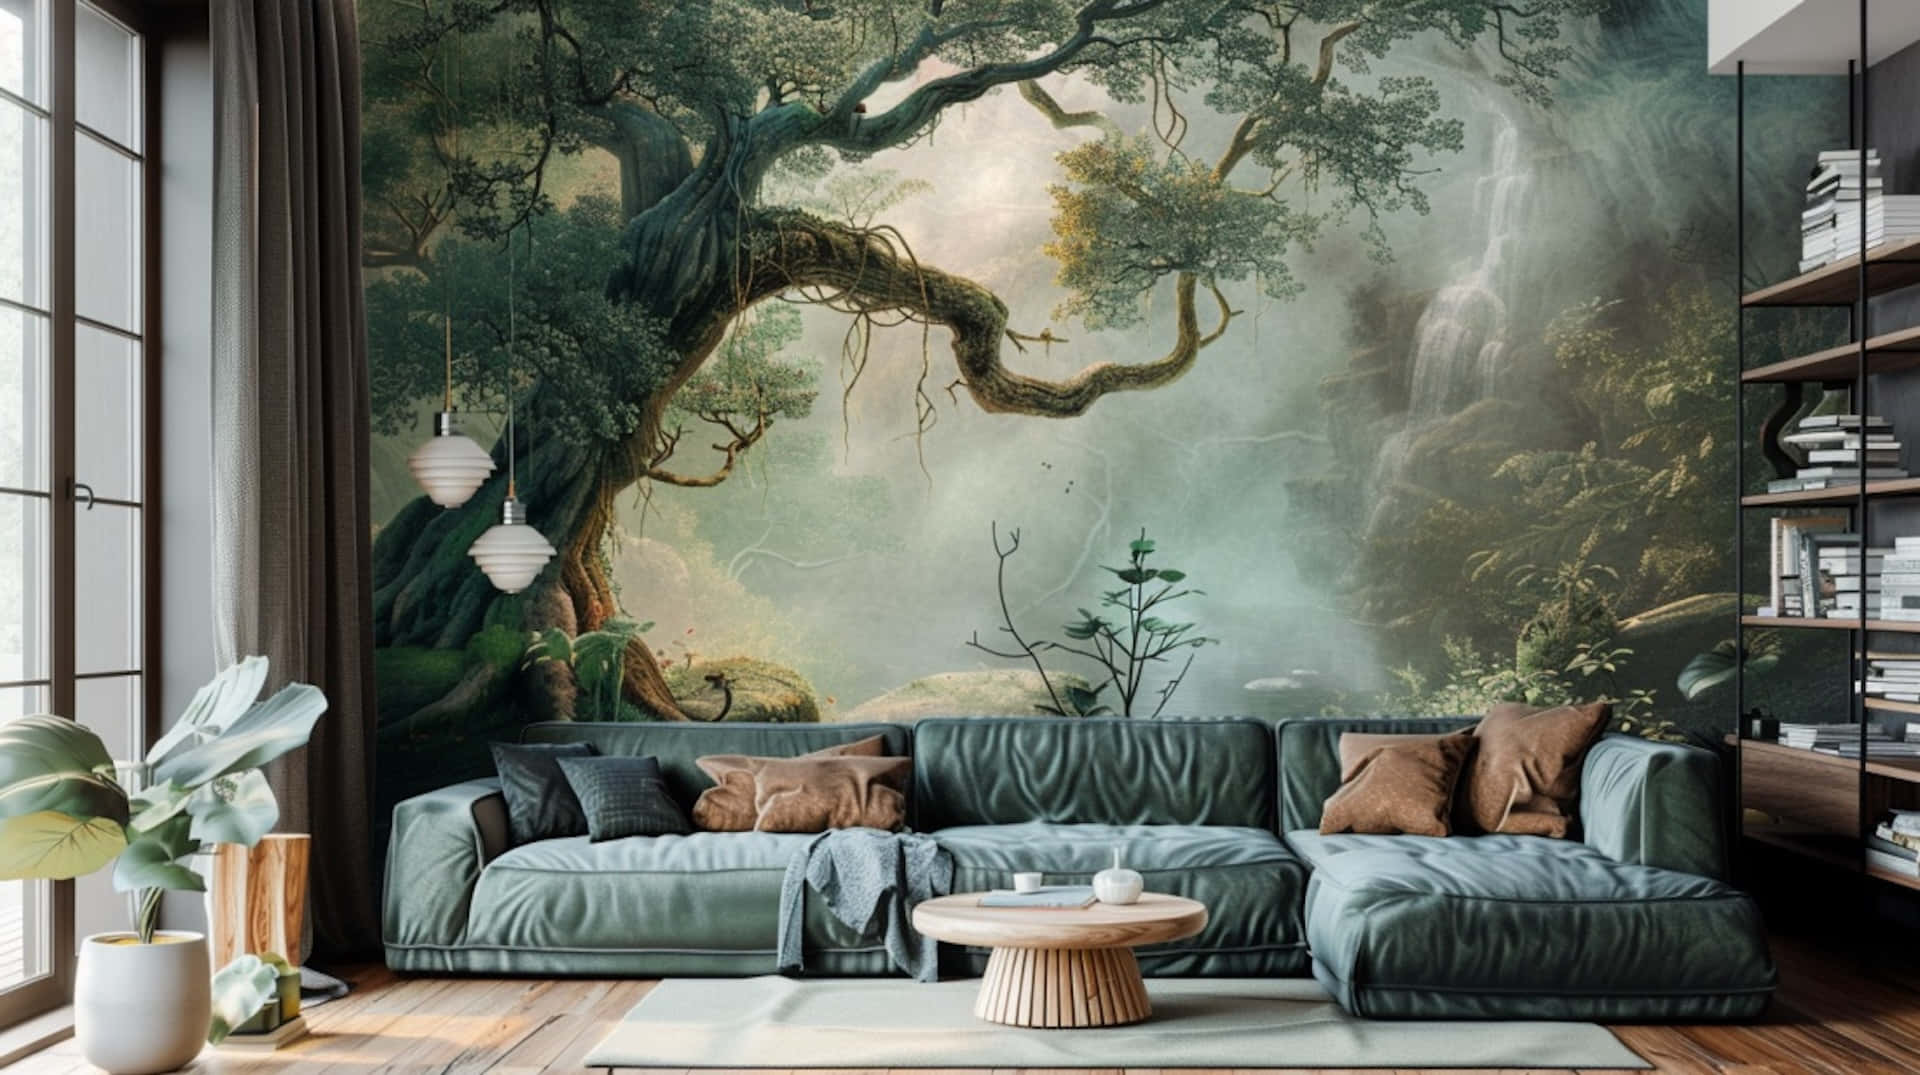 Enchanted Forest Mural Living Room Wallpaper